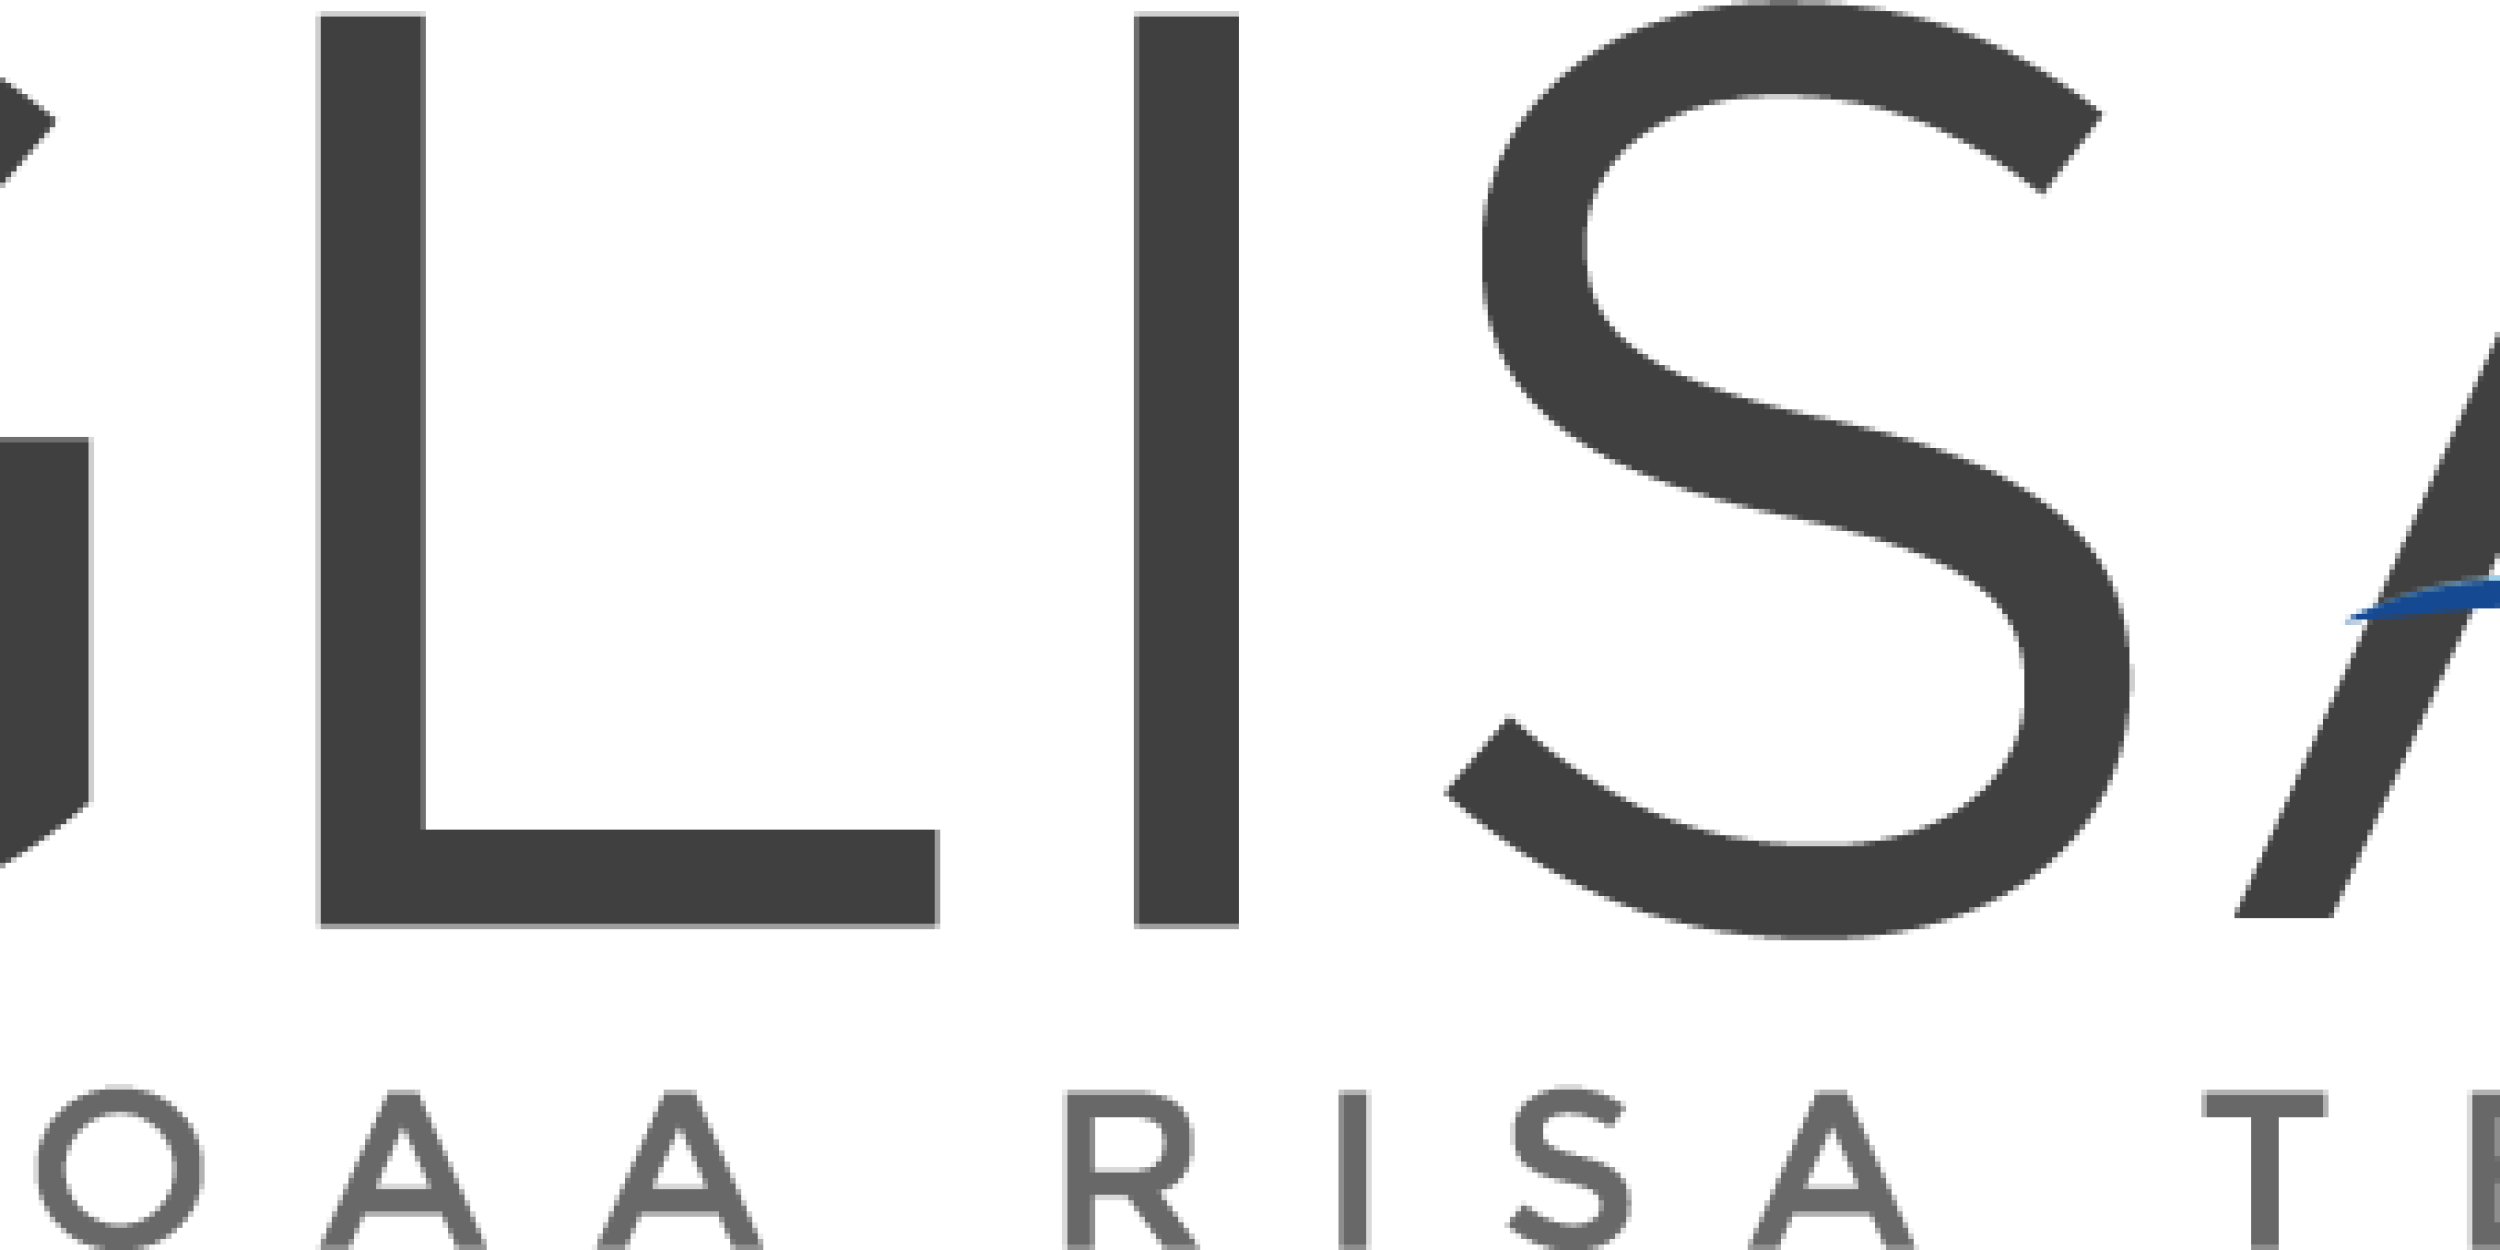 img-GLISA-logo_standard